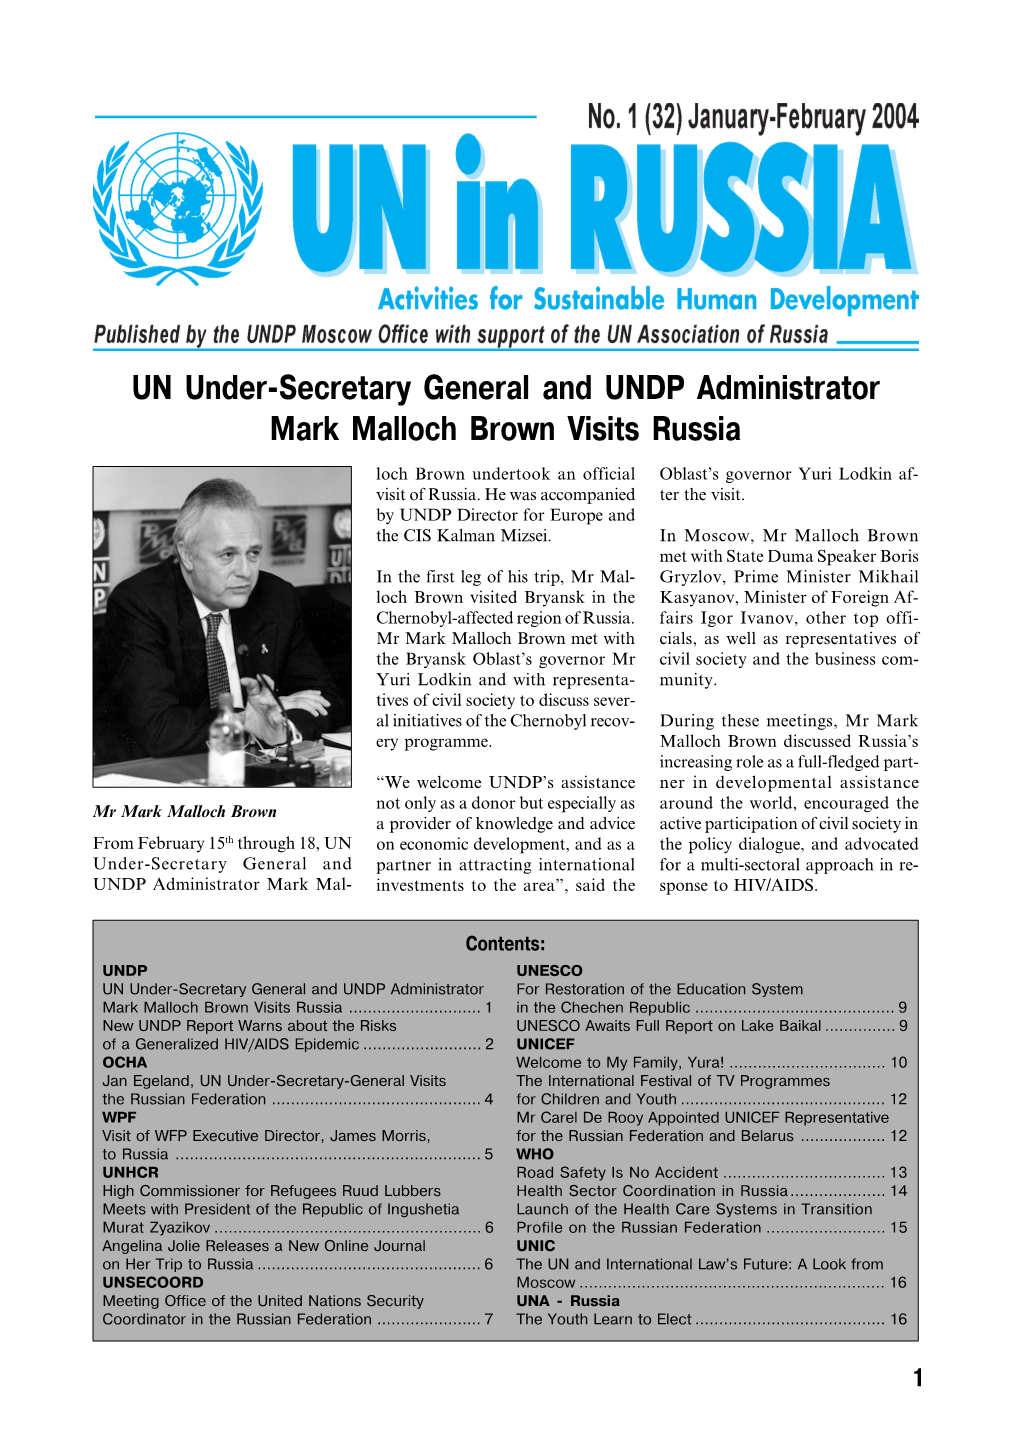 UN Under-Secretary General and UNDP Administrator Mark Malloch Brown Visits Russia